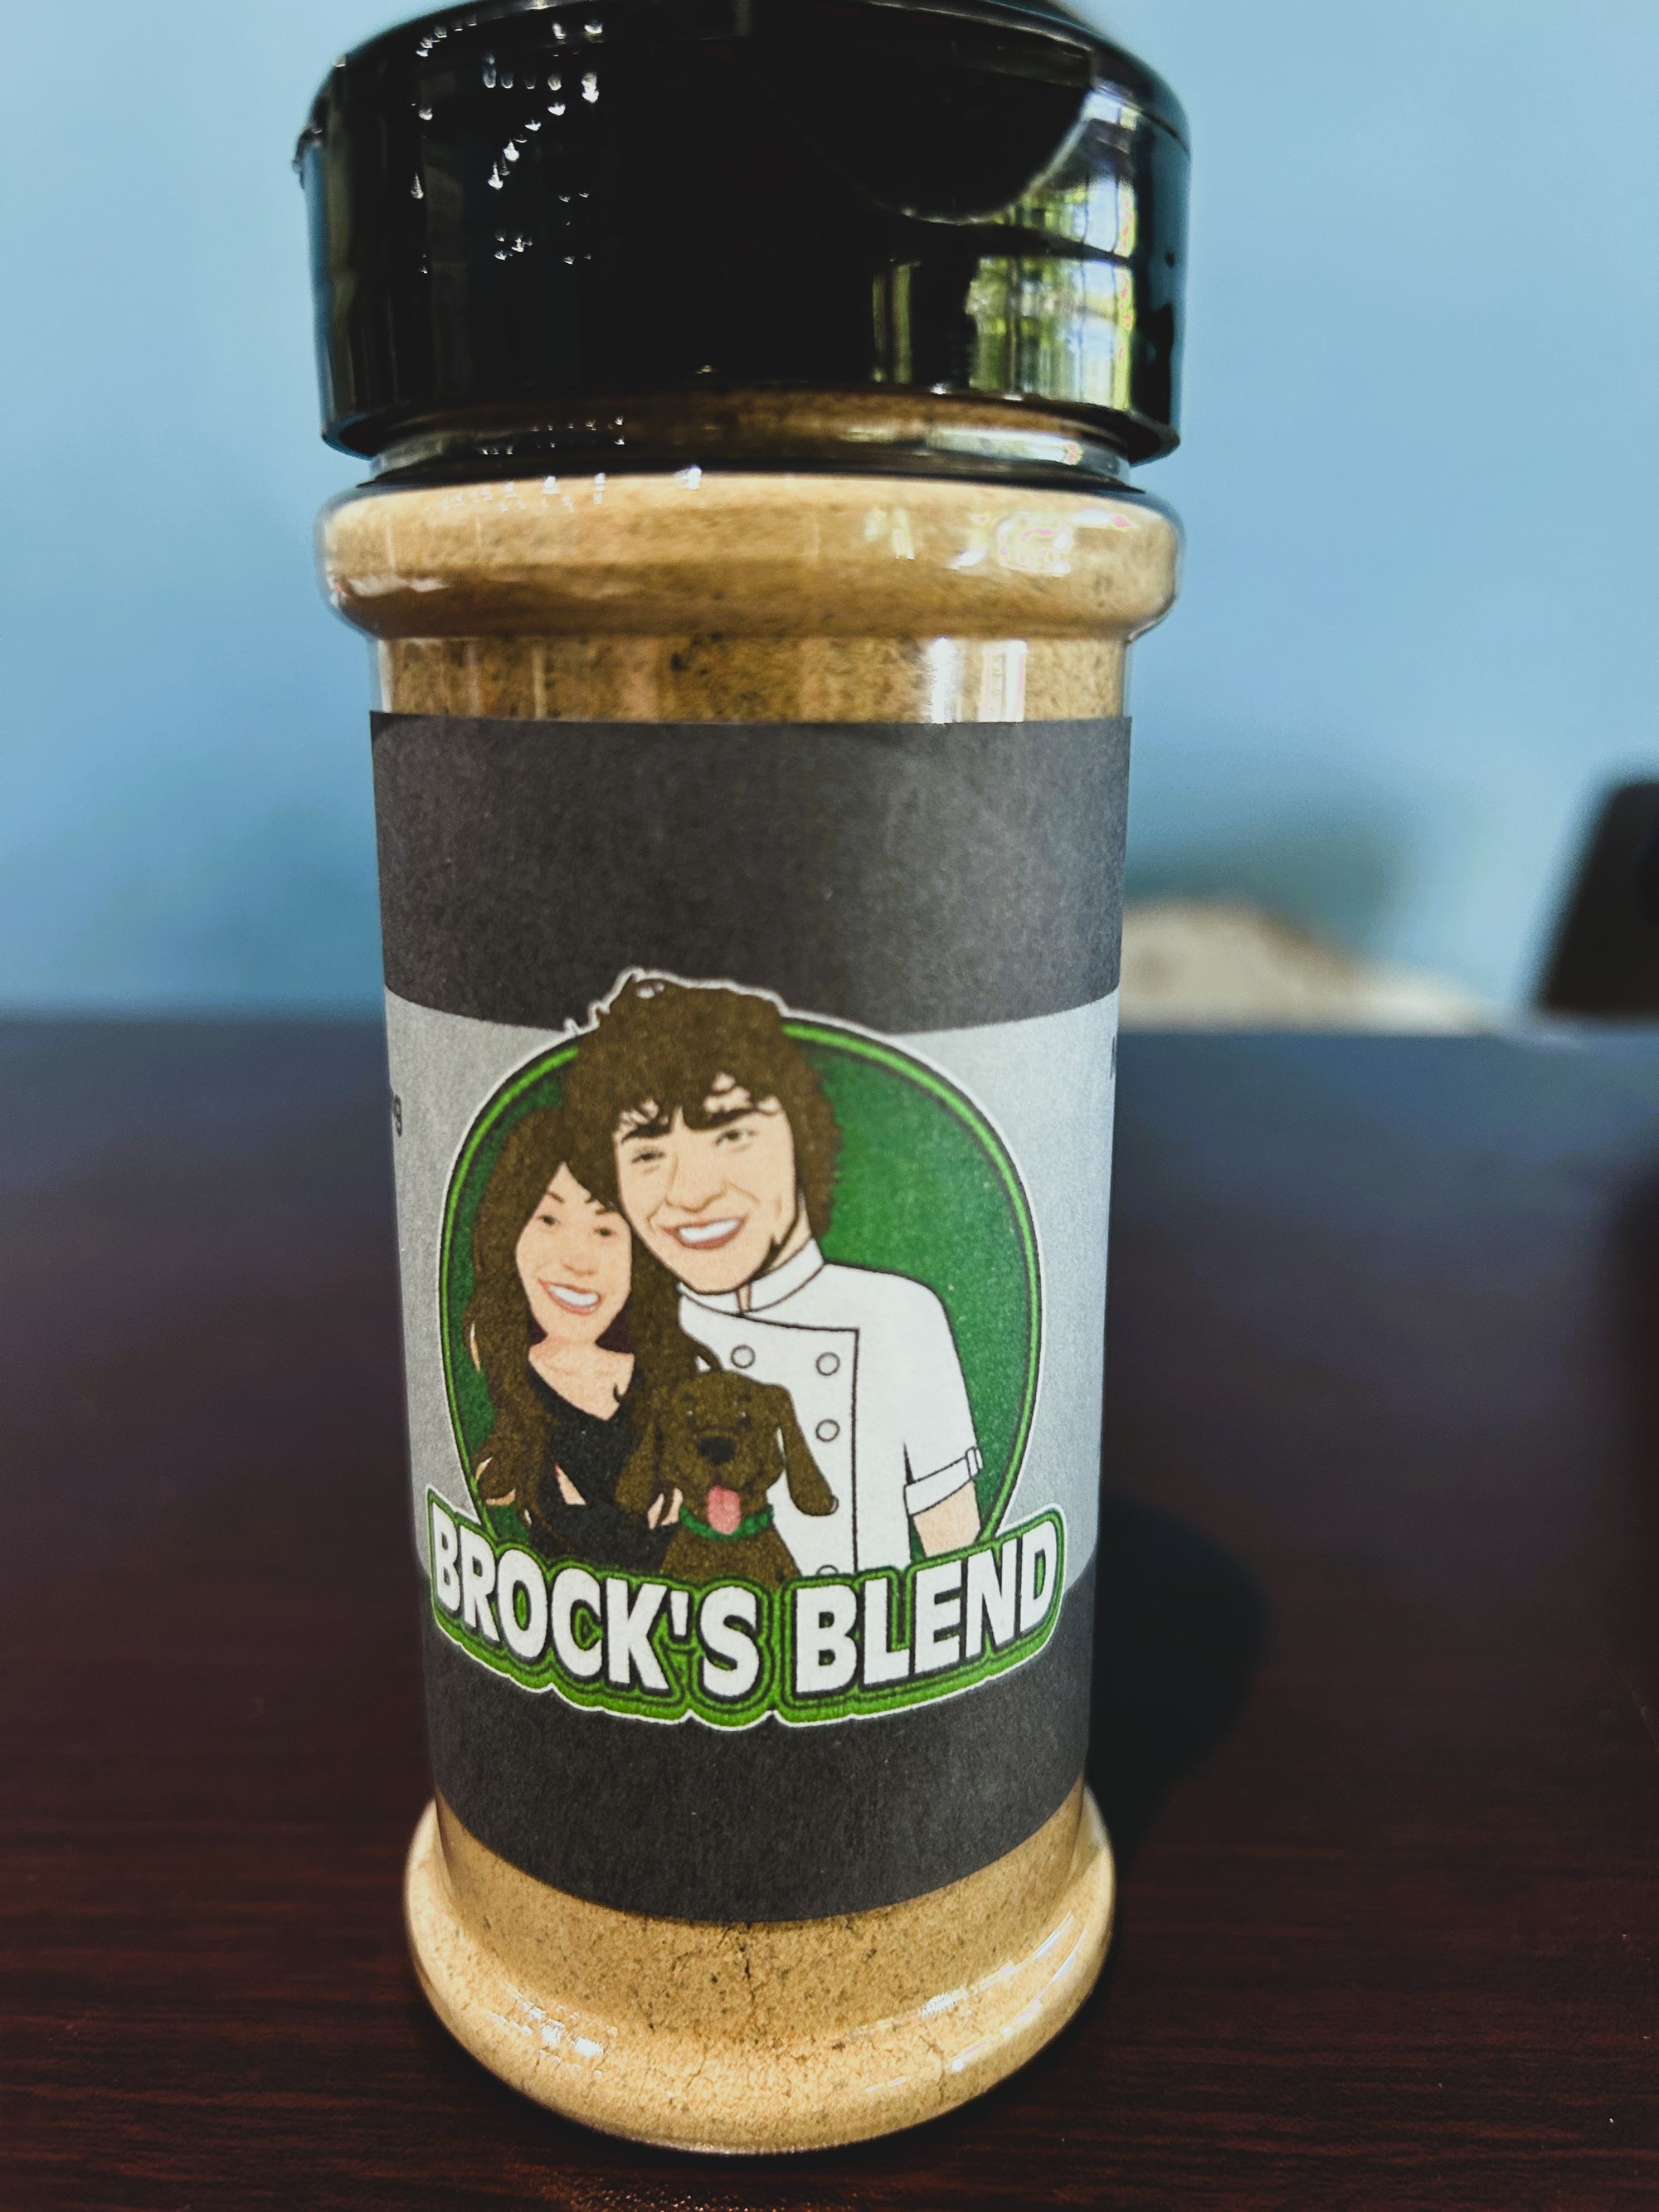 Brock's Blend